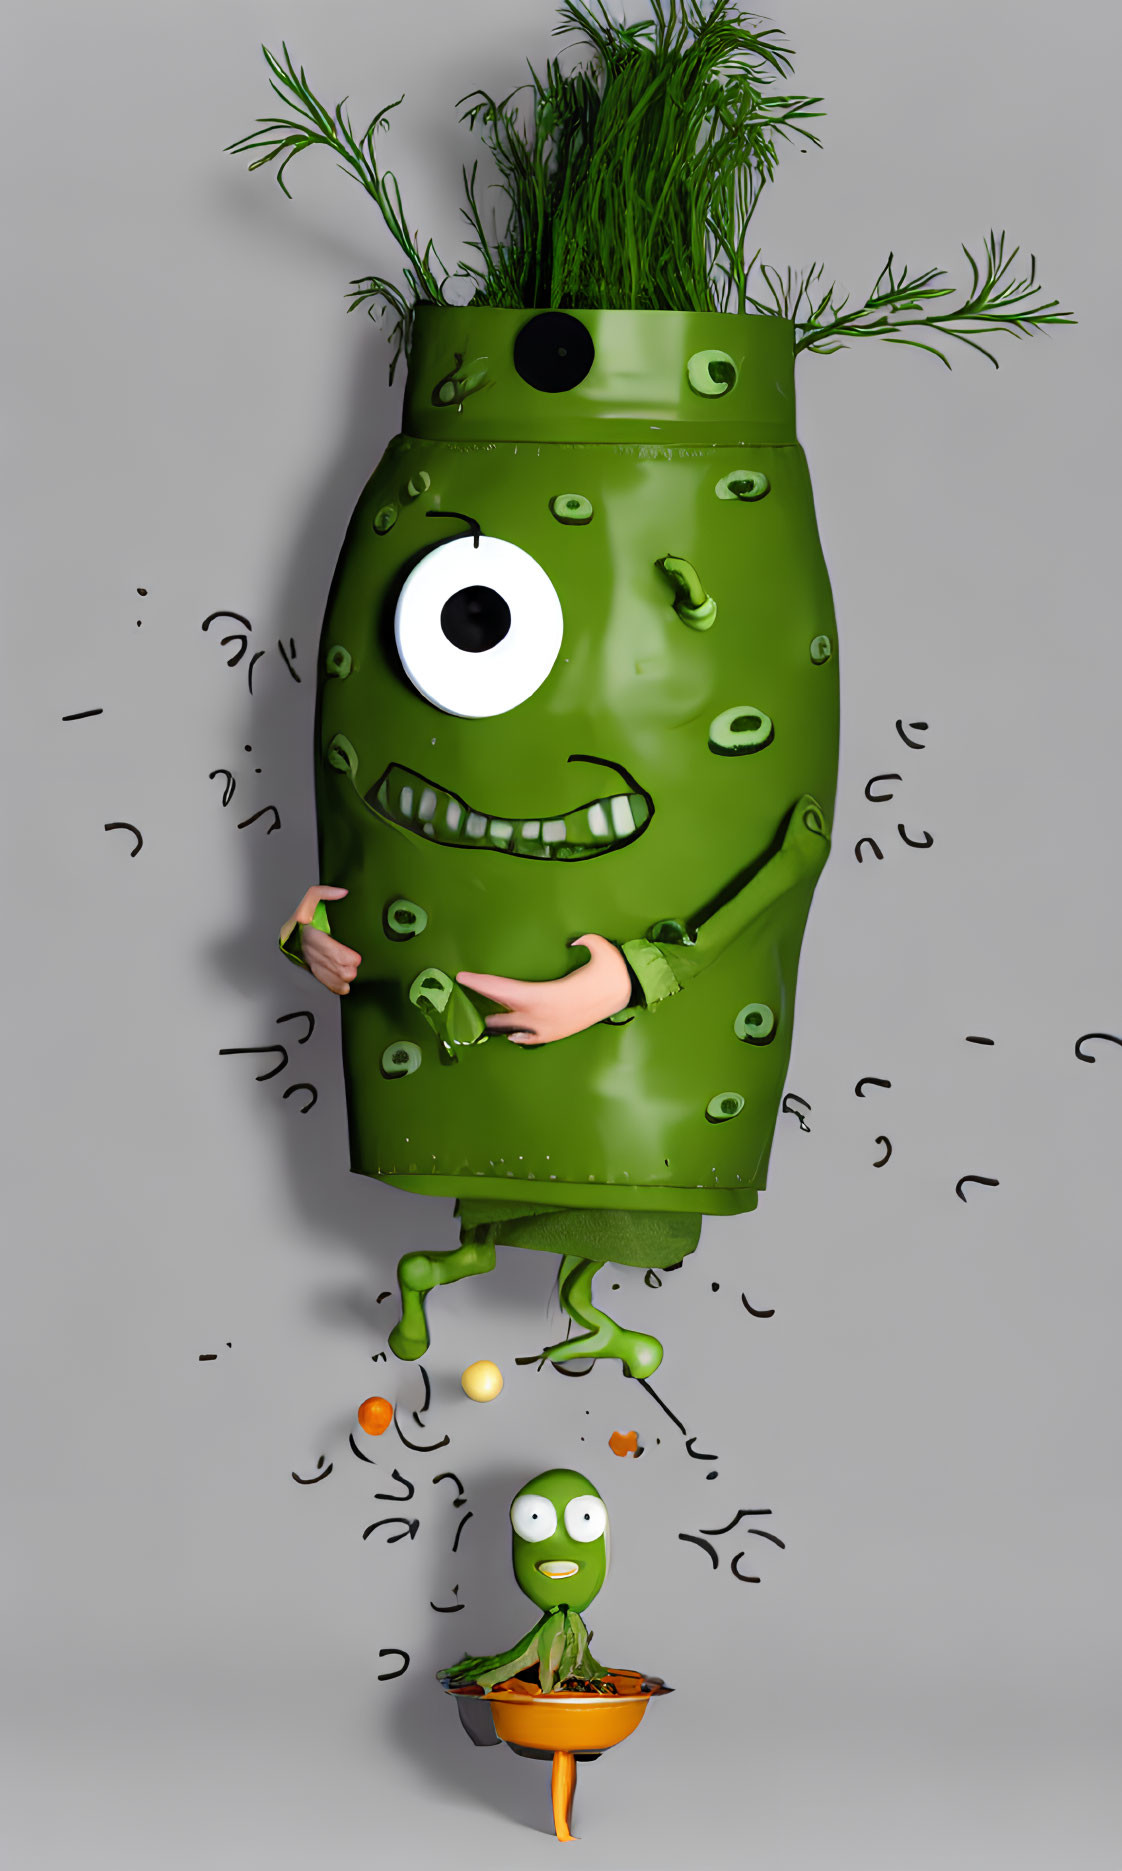 Mr. Pickle has one eye